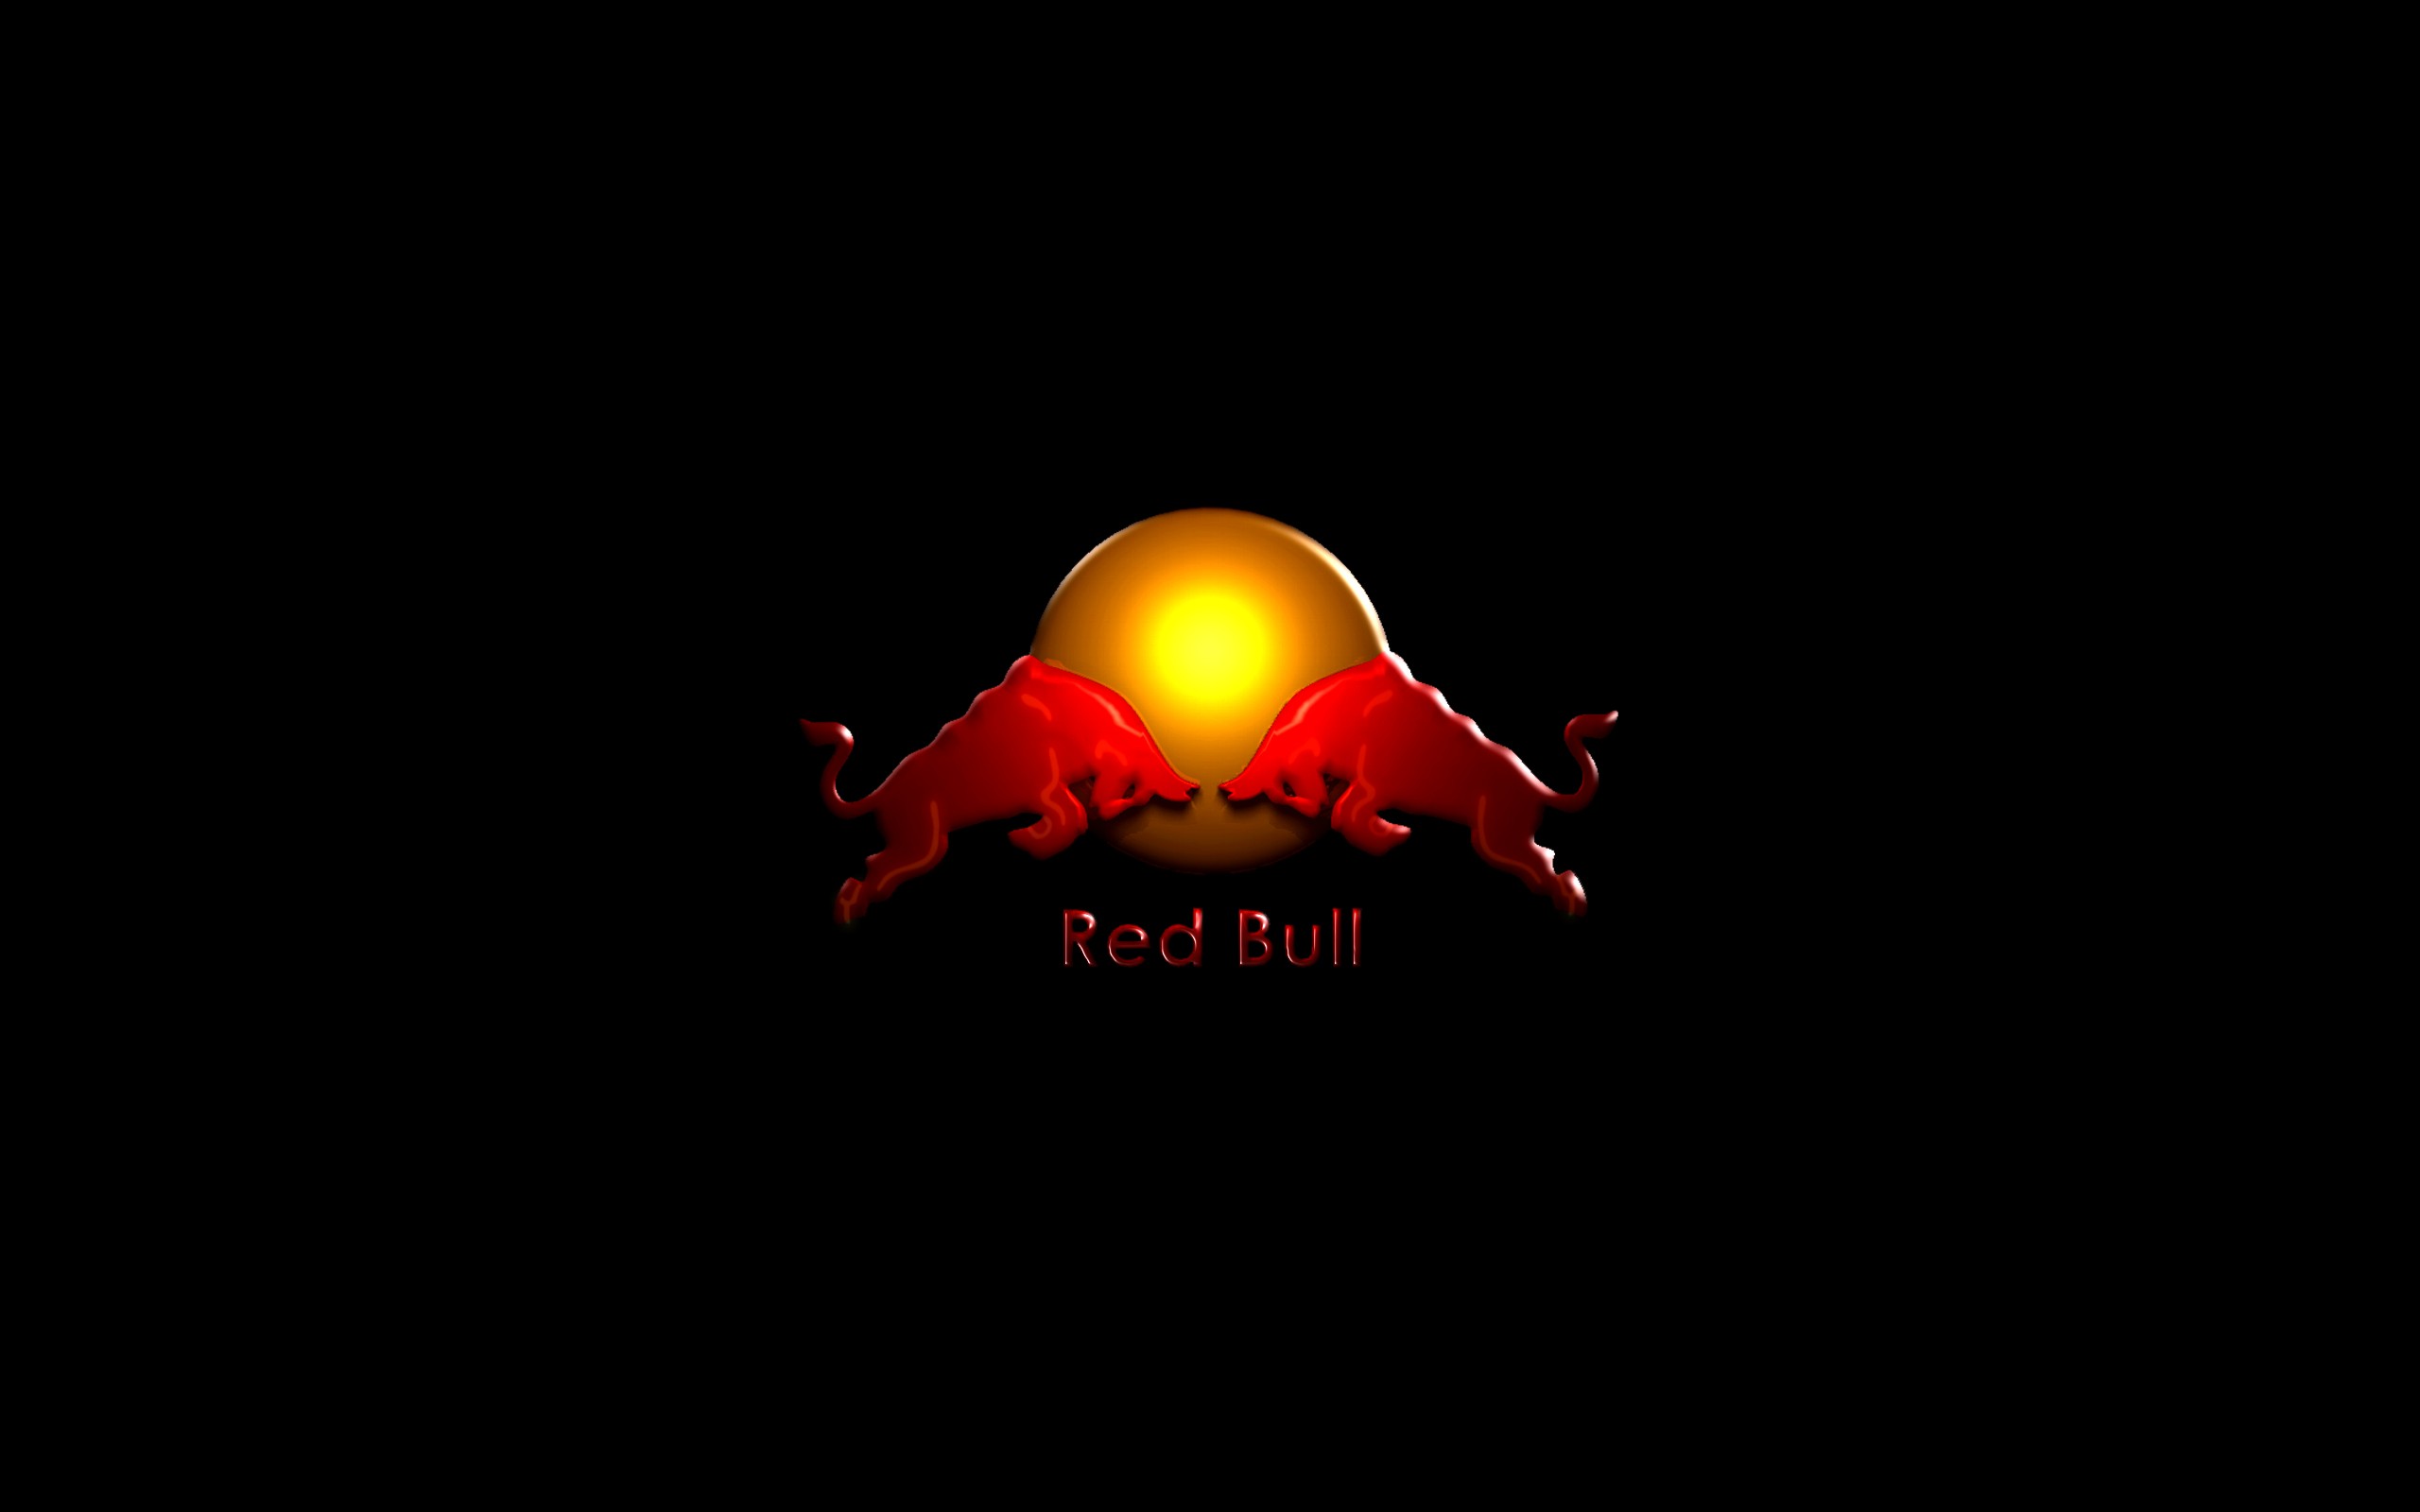 Red Bull Wallpaper 2560x1600 69528